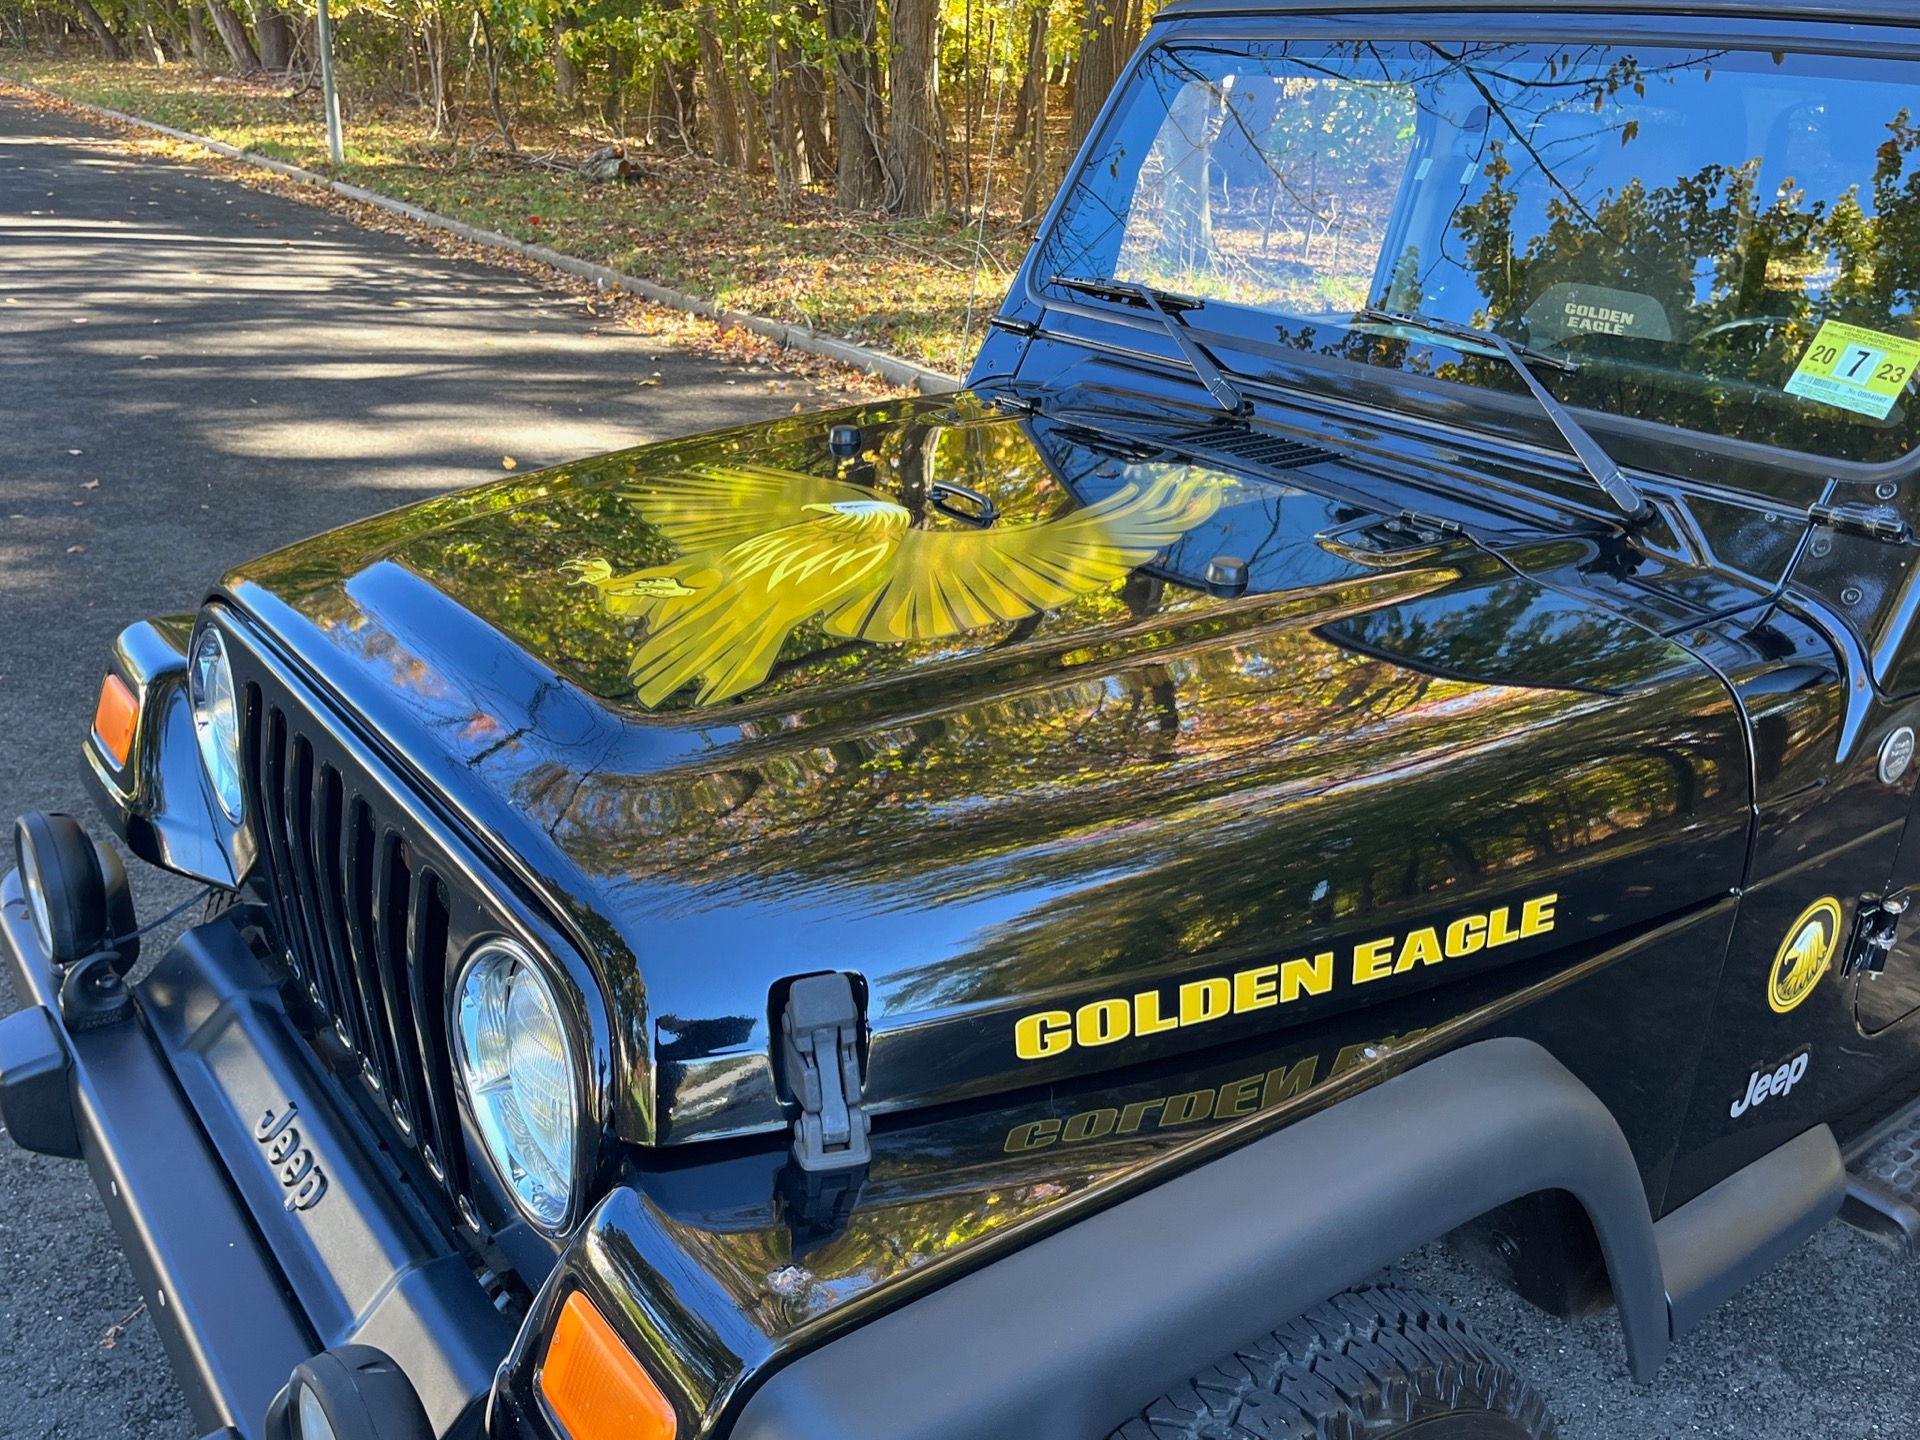 Used-2006-Jeep-Wrangler-Golden-Eagle-TJ